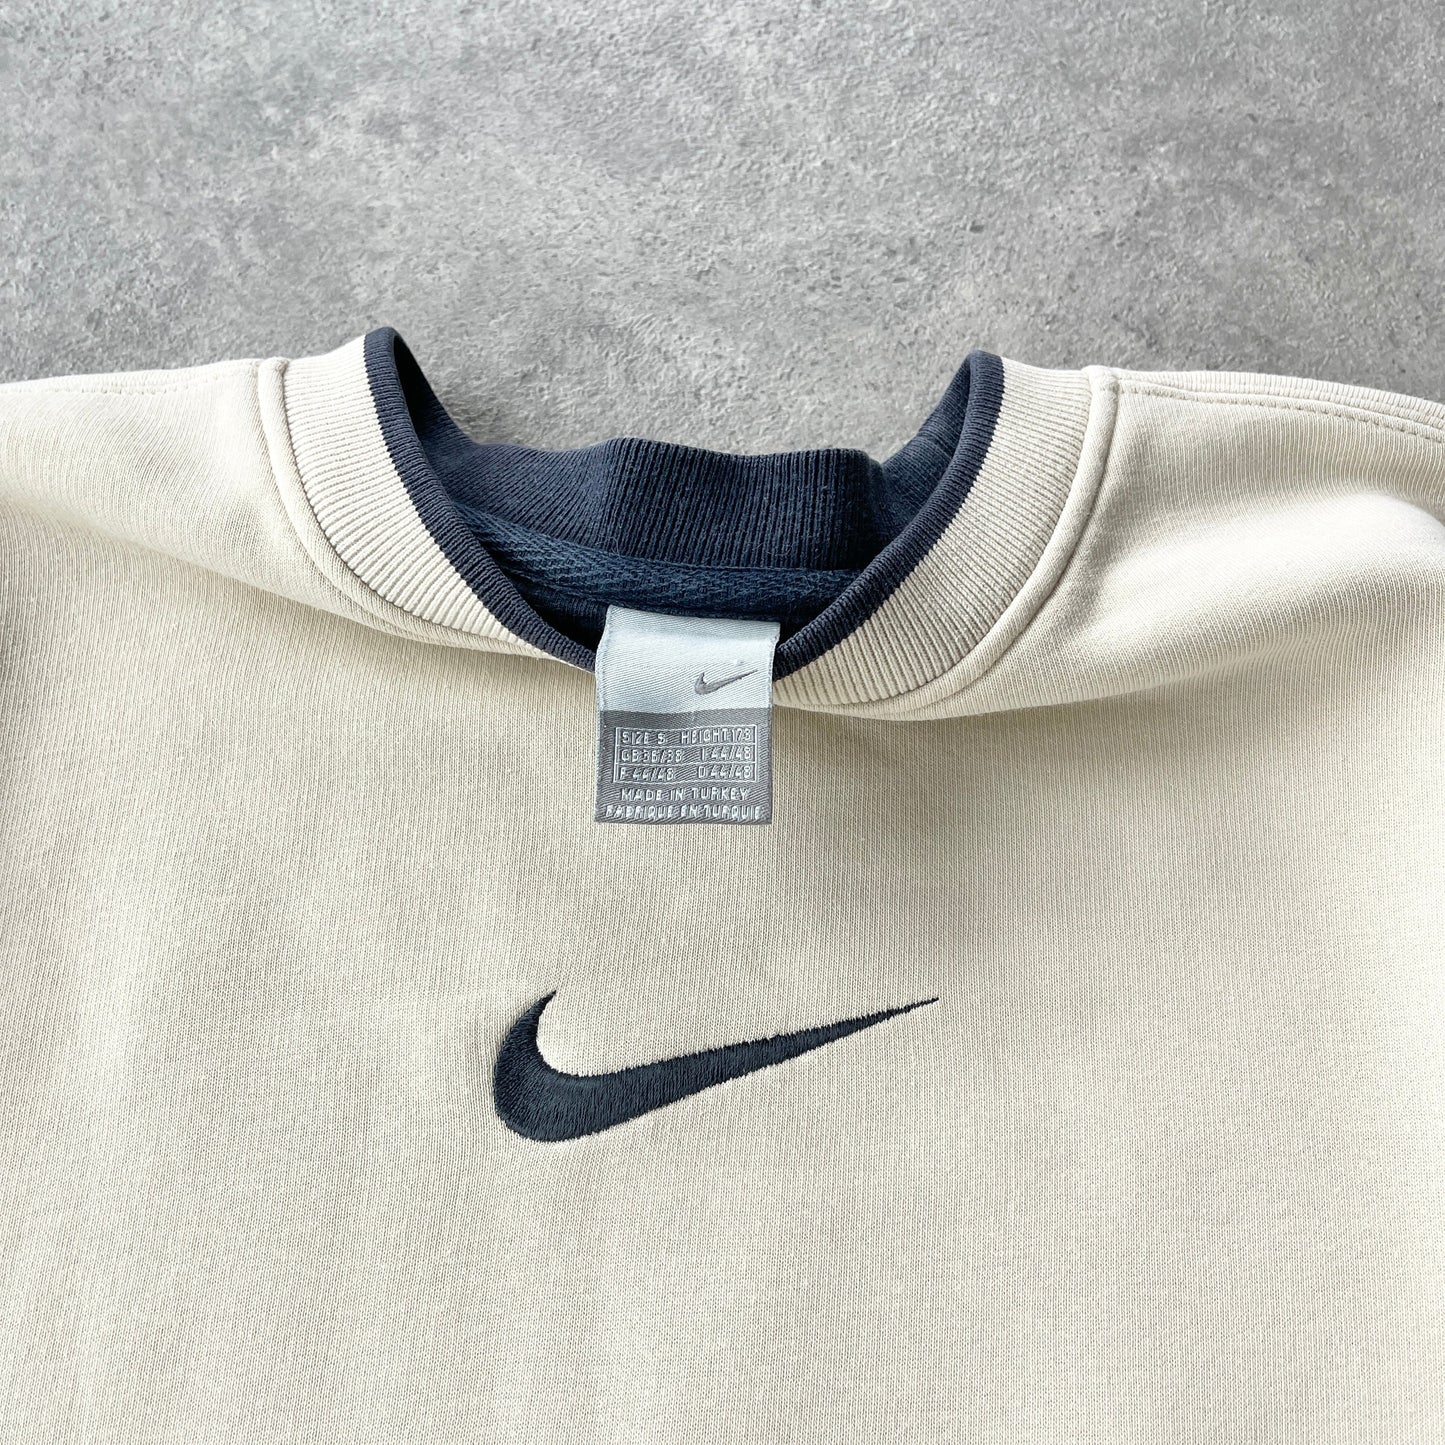 Nike RARE 2000s heavyweight embroidered sweatshirt (S)